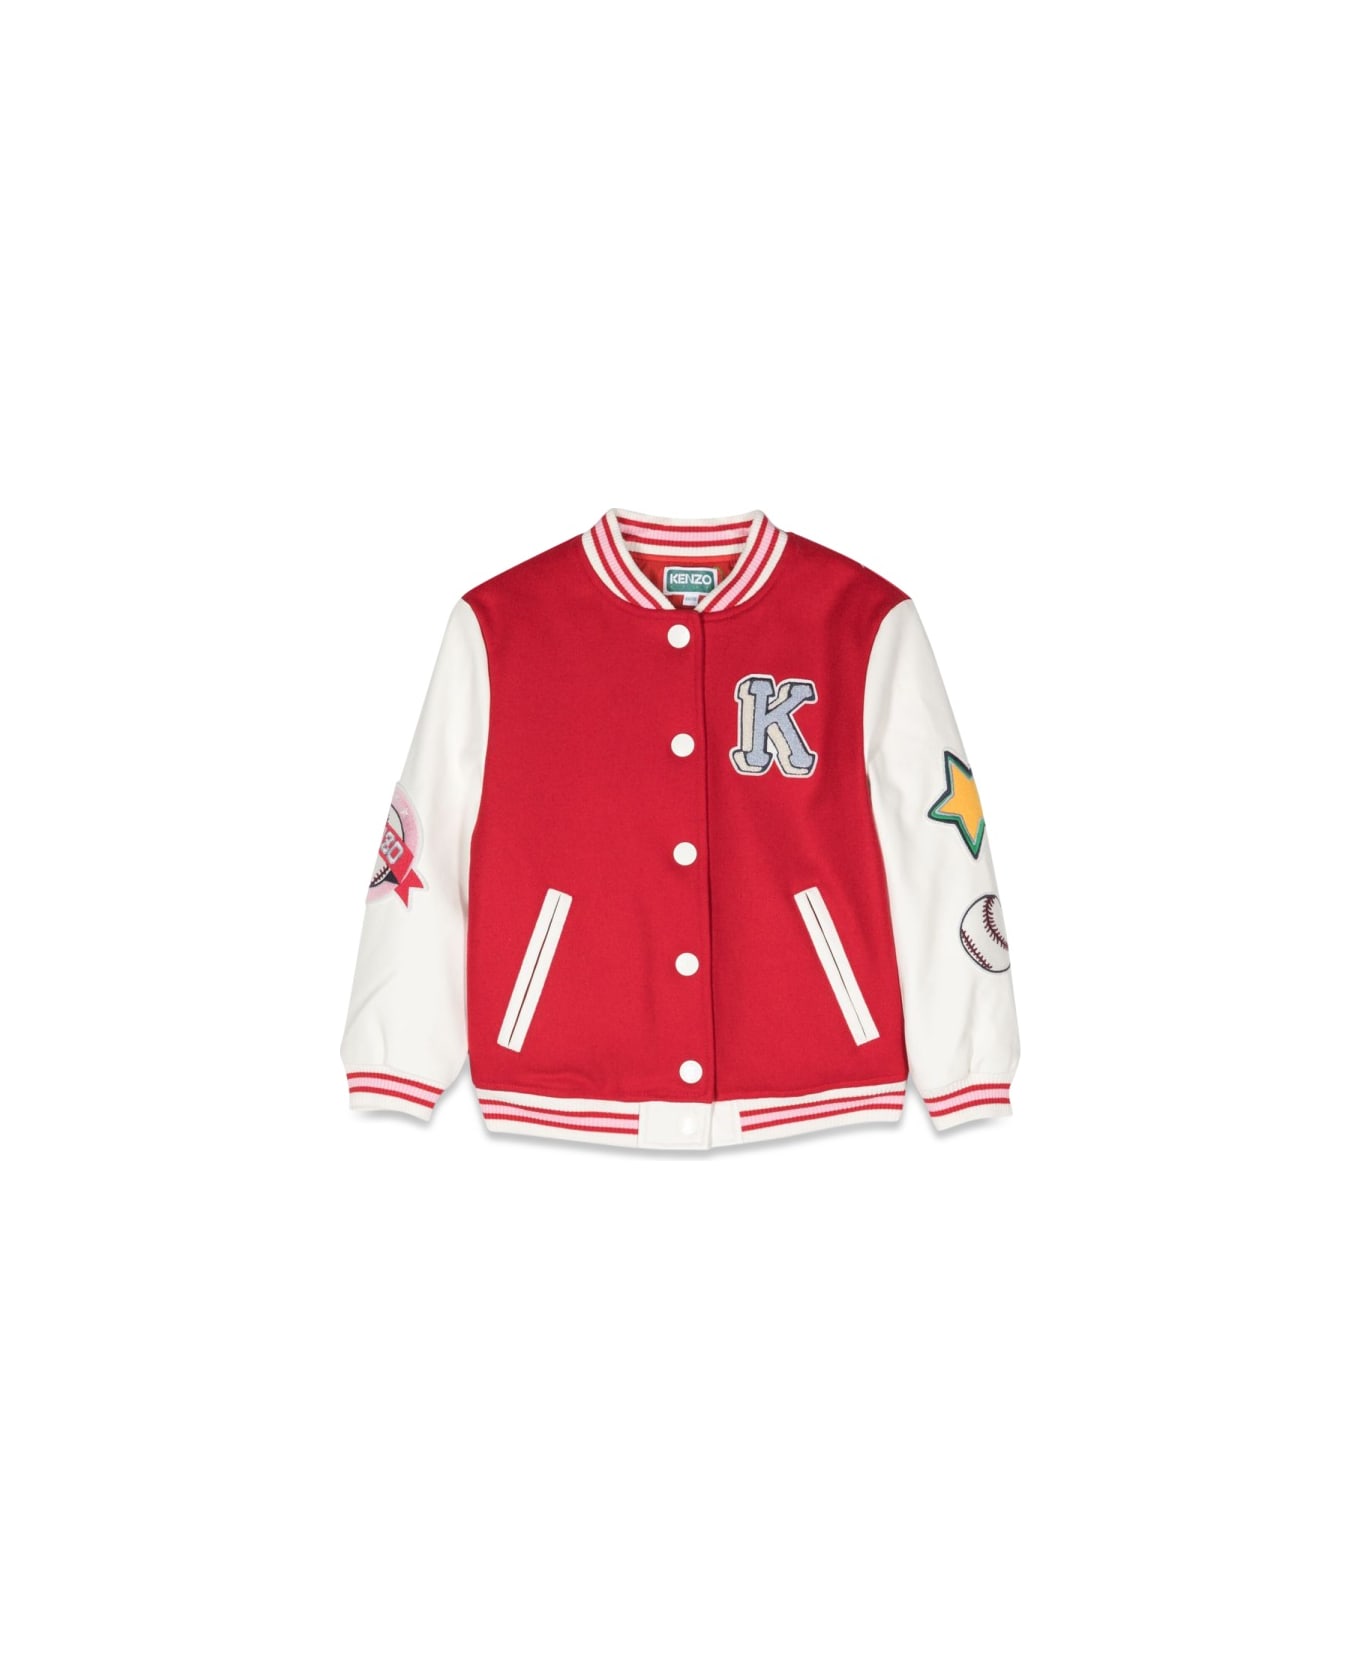 Kenzo Kids Varsity Jacket - RED